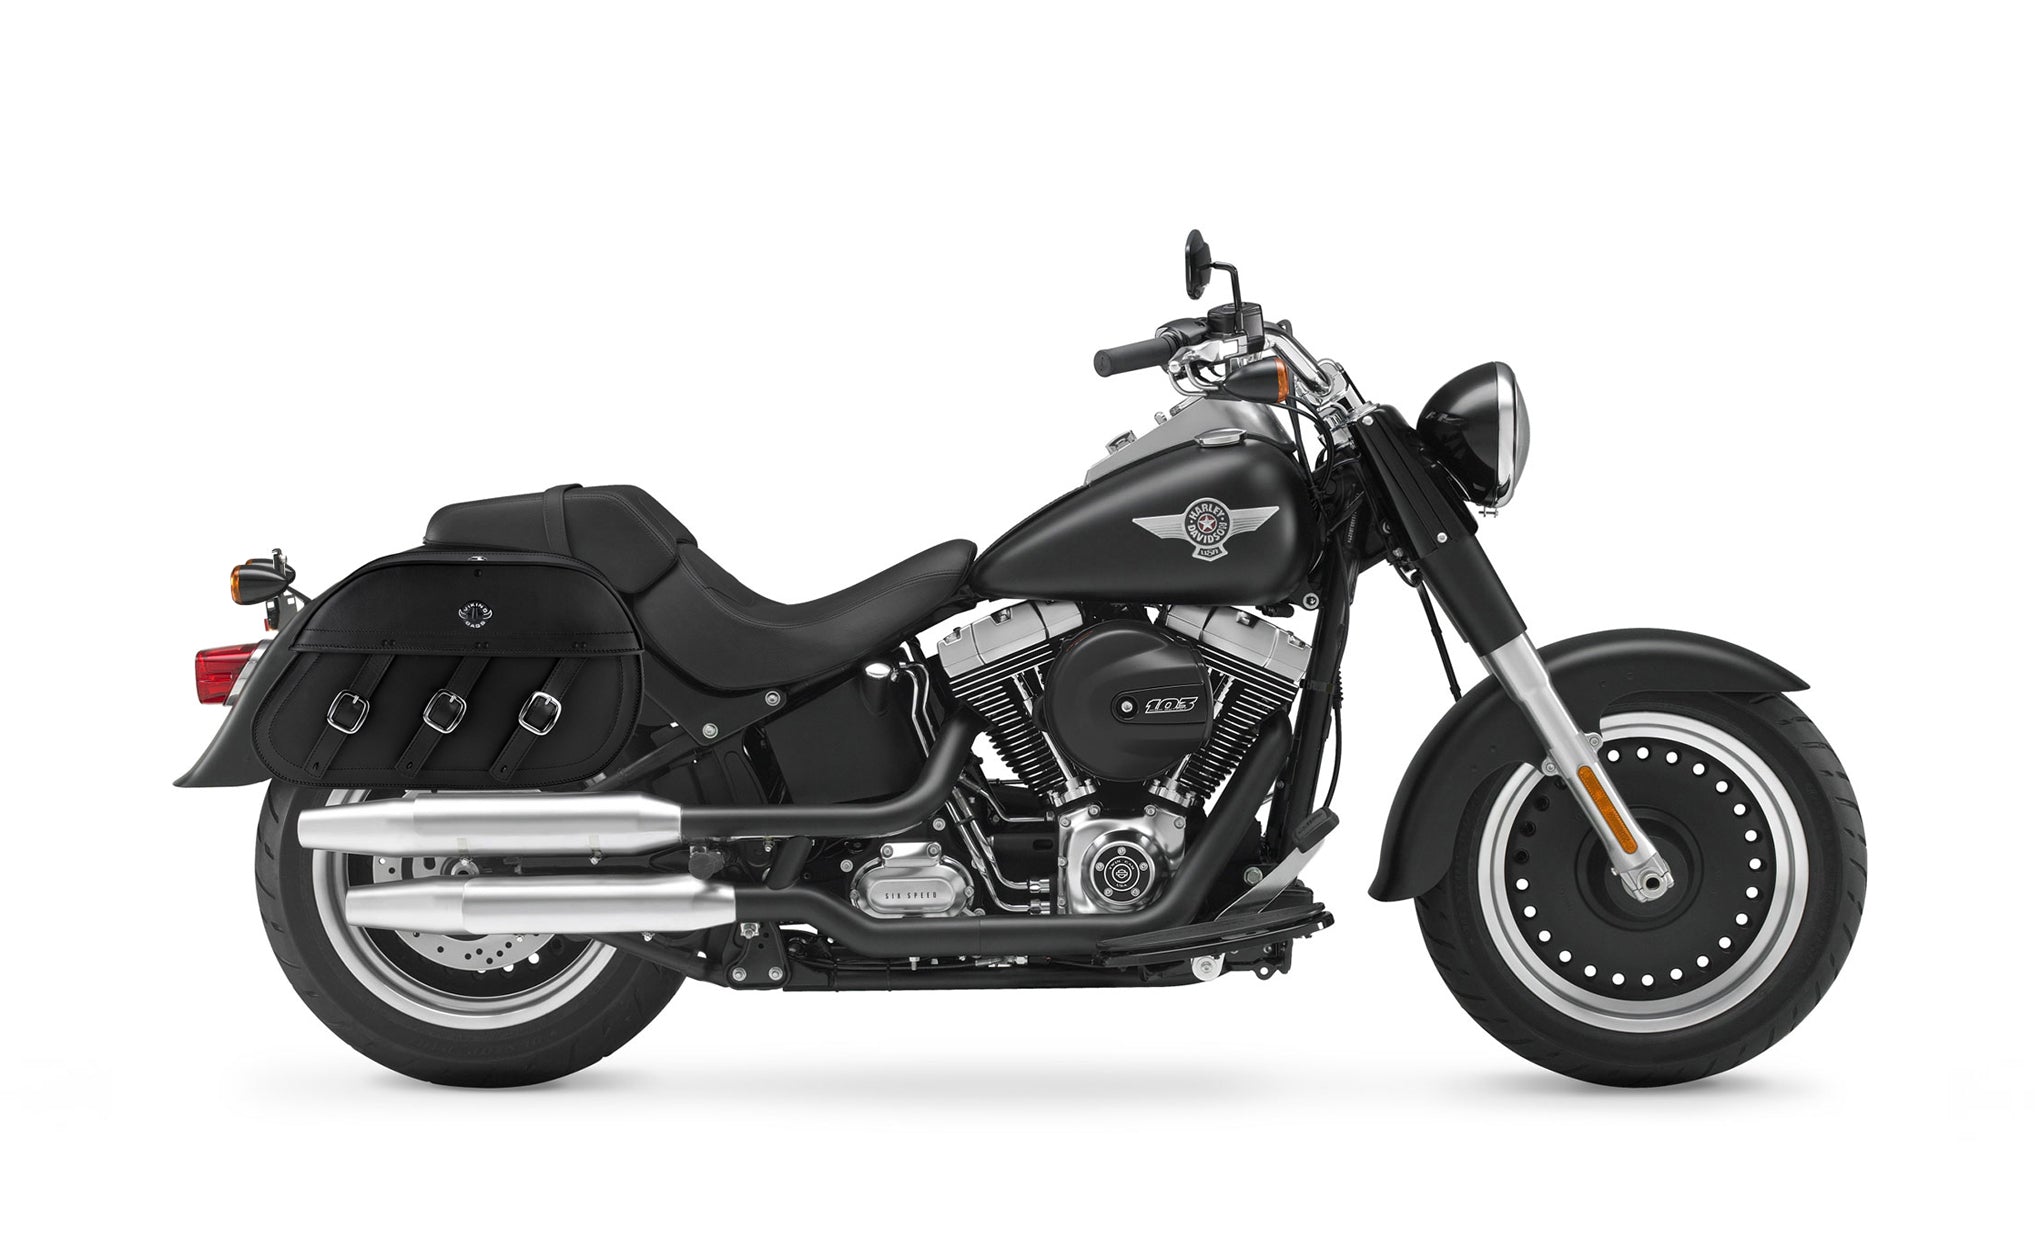 Viking Trianon Extra Large Leather Motorcycle Saddlebags For Harley Softail Fat Boy Lo Flstfb on Bike Photo @expand